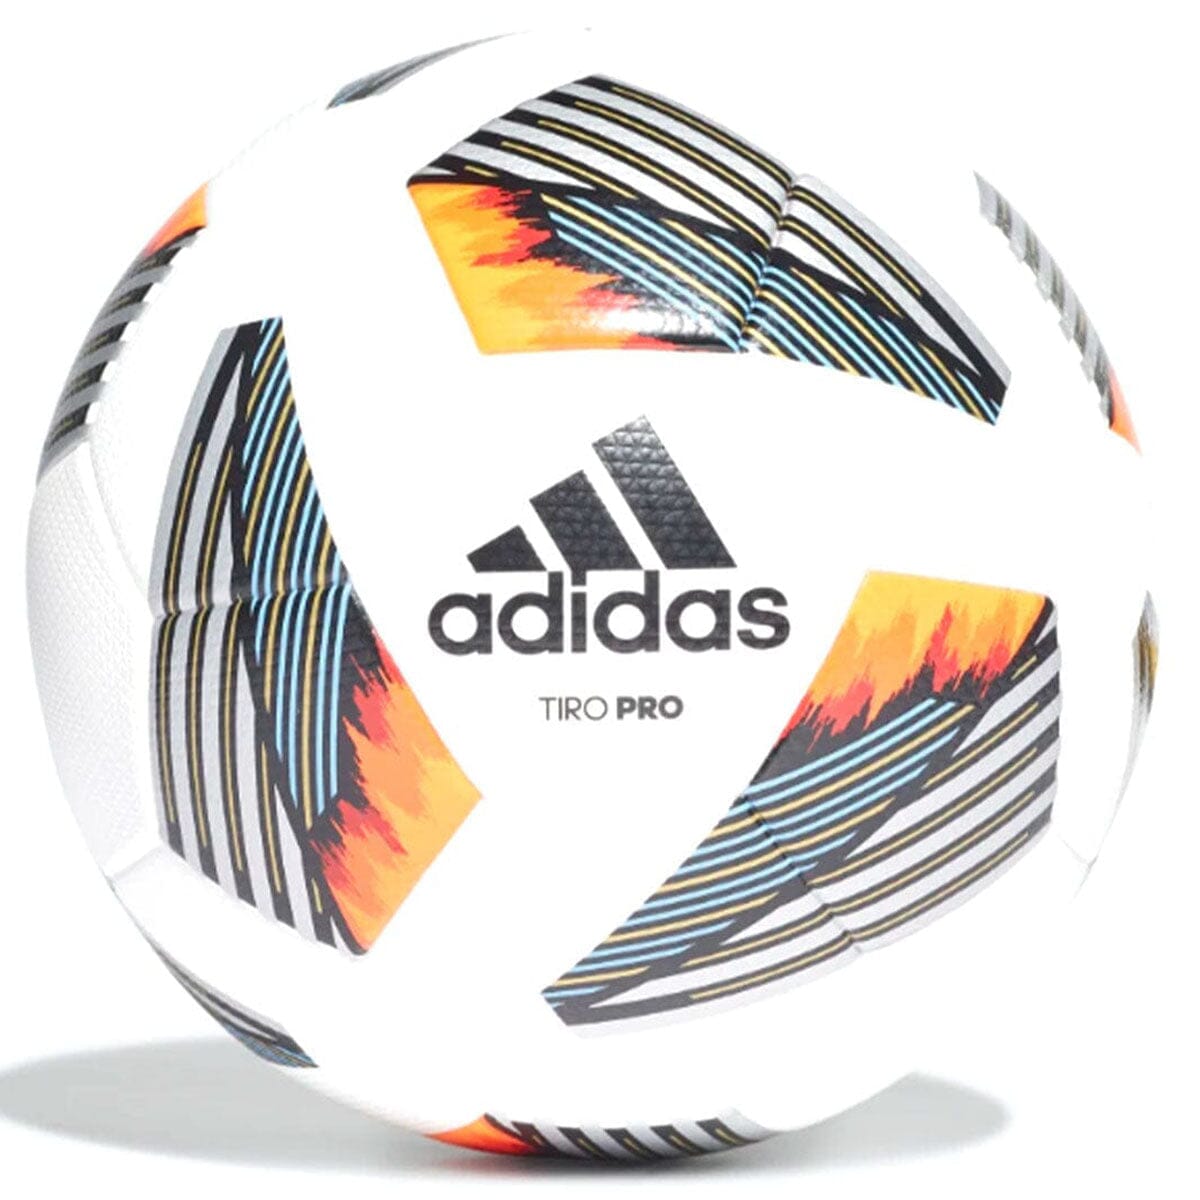 adidas Tiro Pro Ball | FS0373 Soccer Ball Adidas 5 White / Black / Team Light Blue / Metallic Silver 